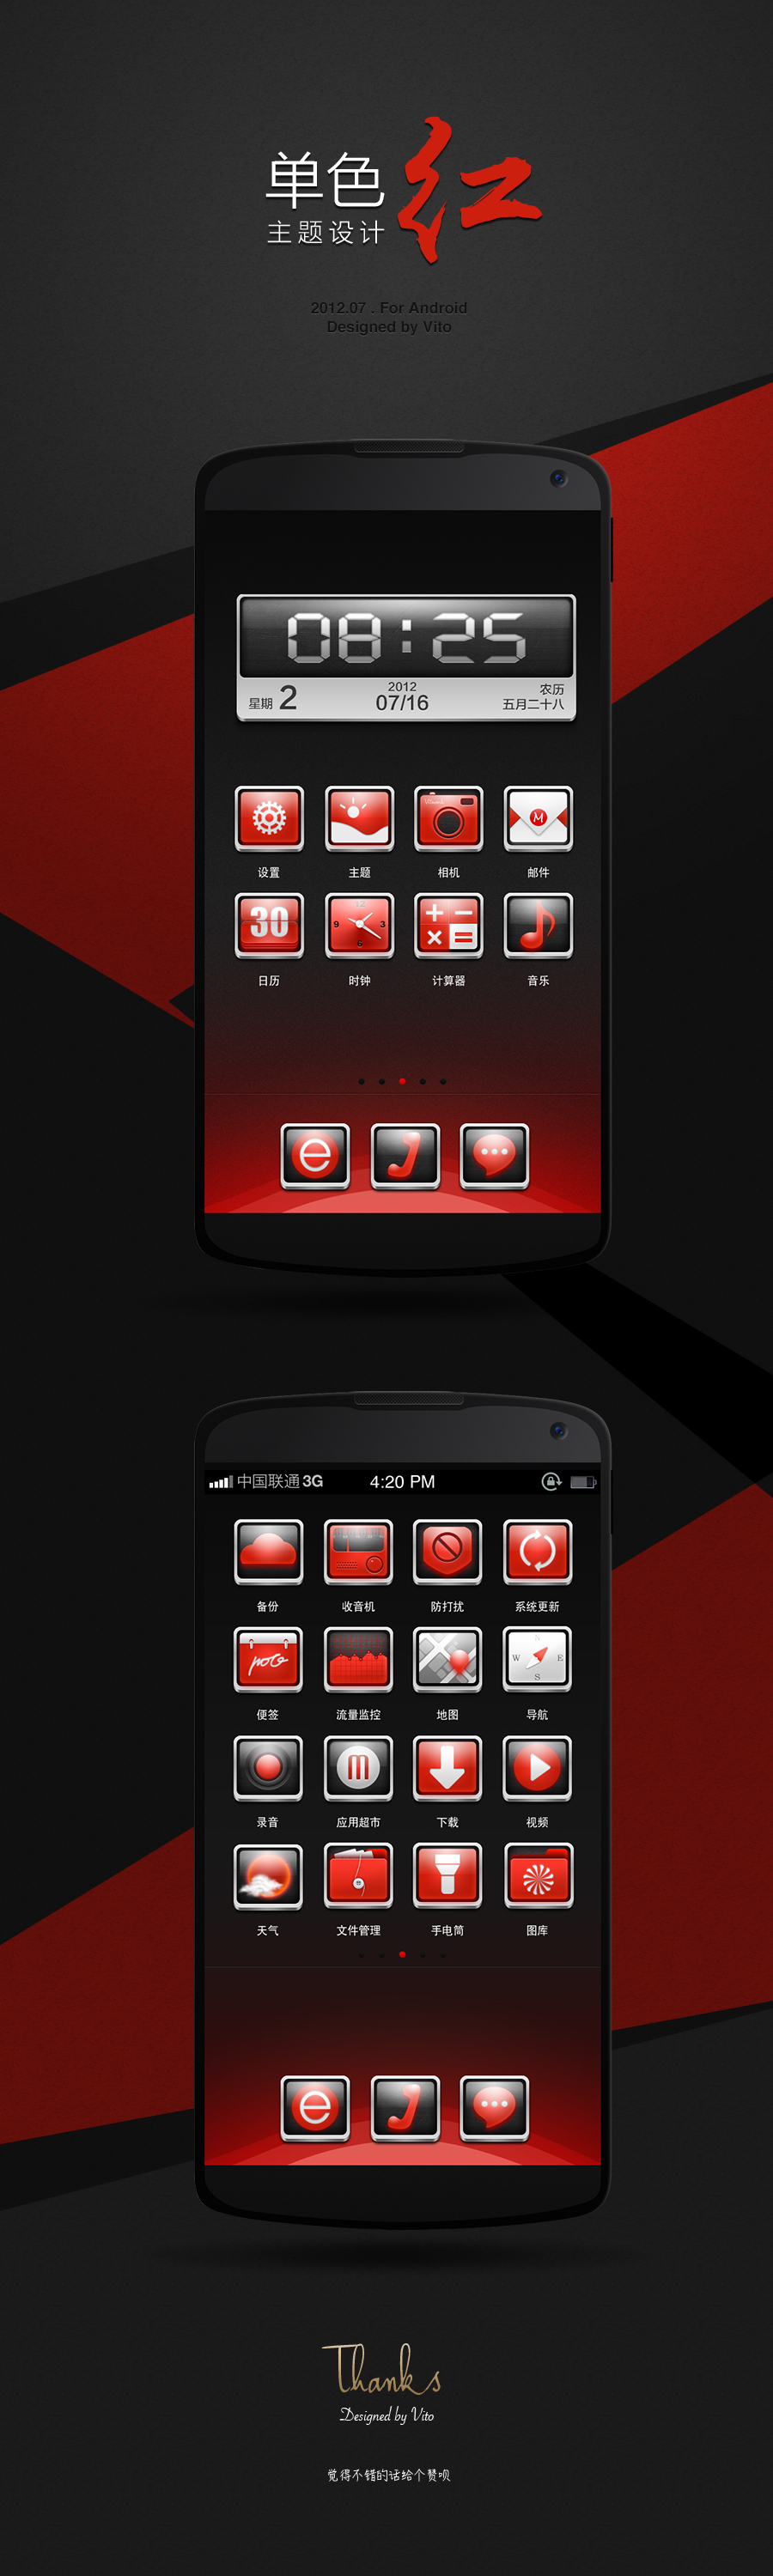 Android主題設計——紅黑主題圖0